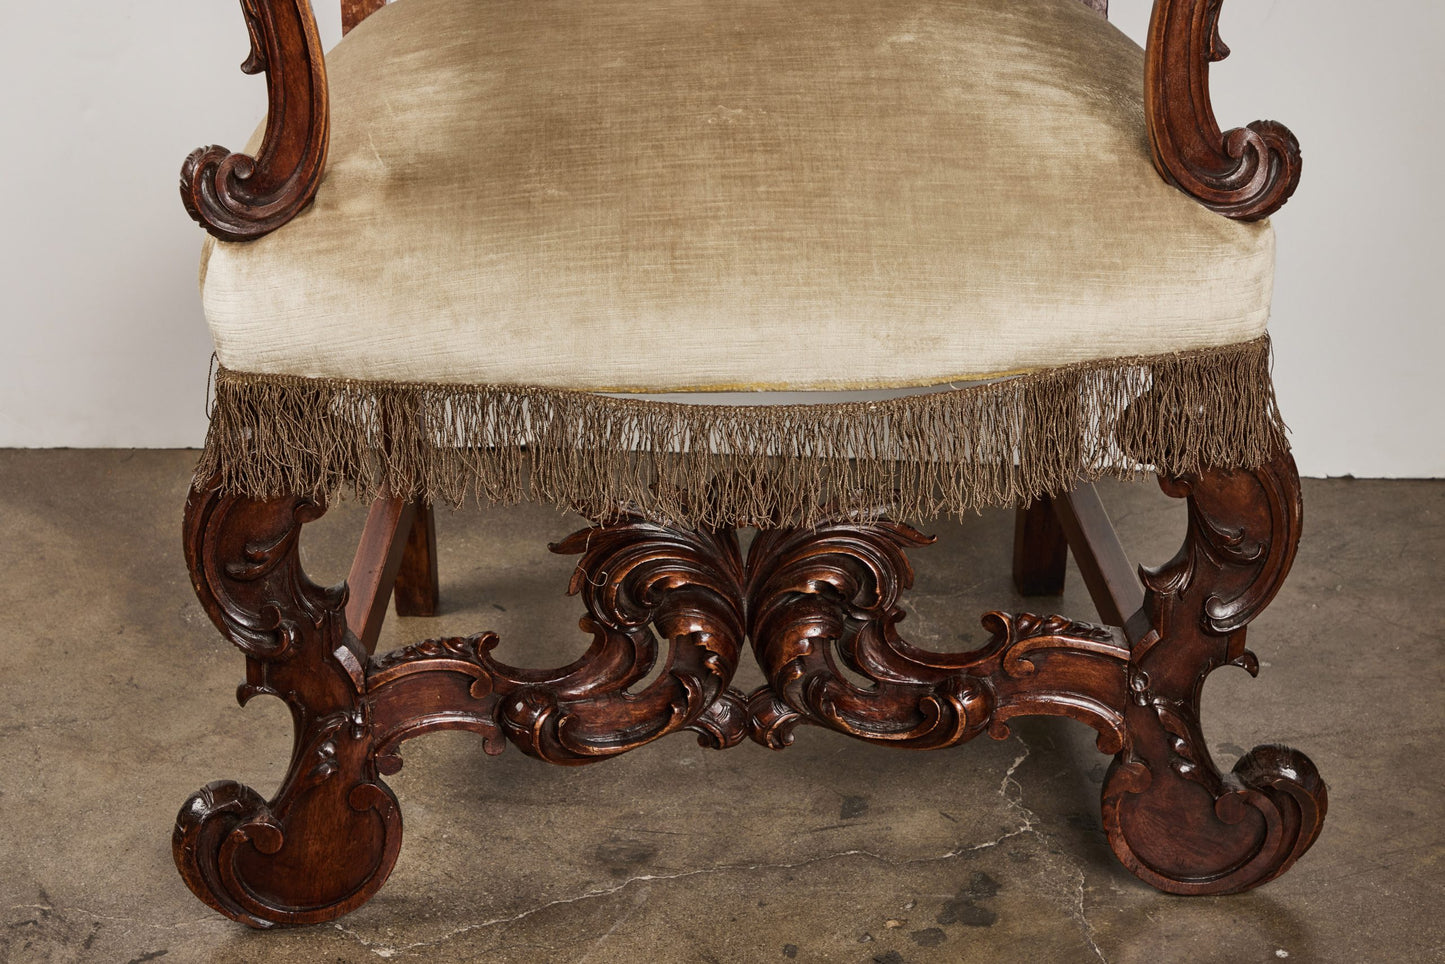 Walnut Venetian Arm Chair  "Her"